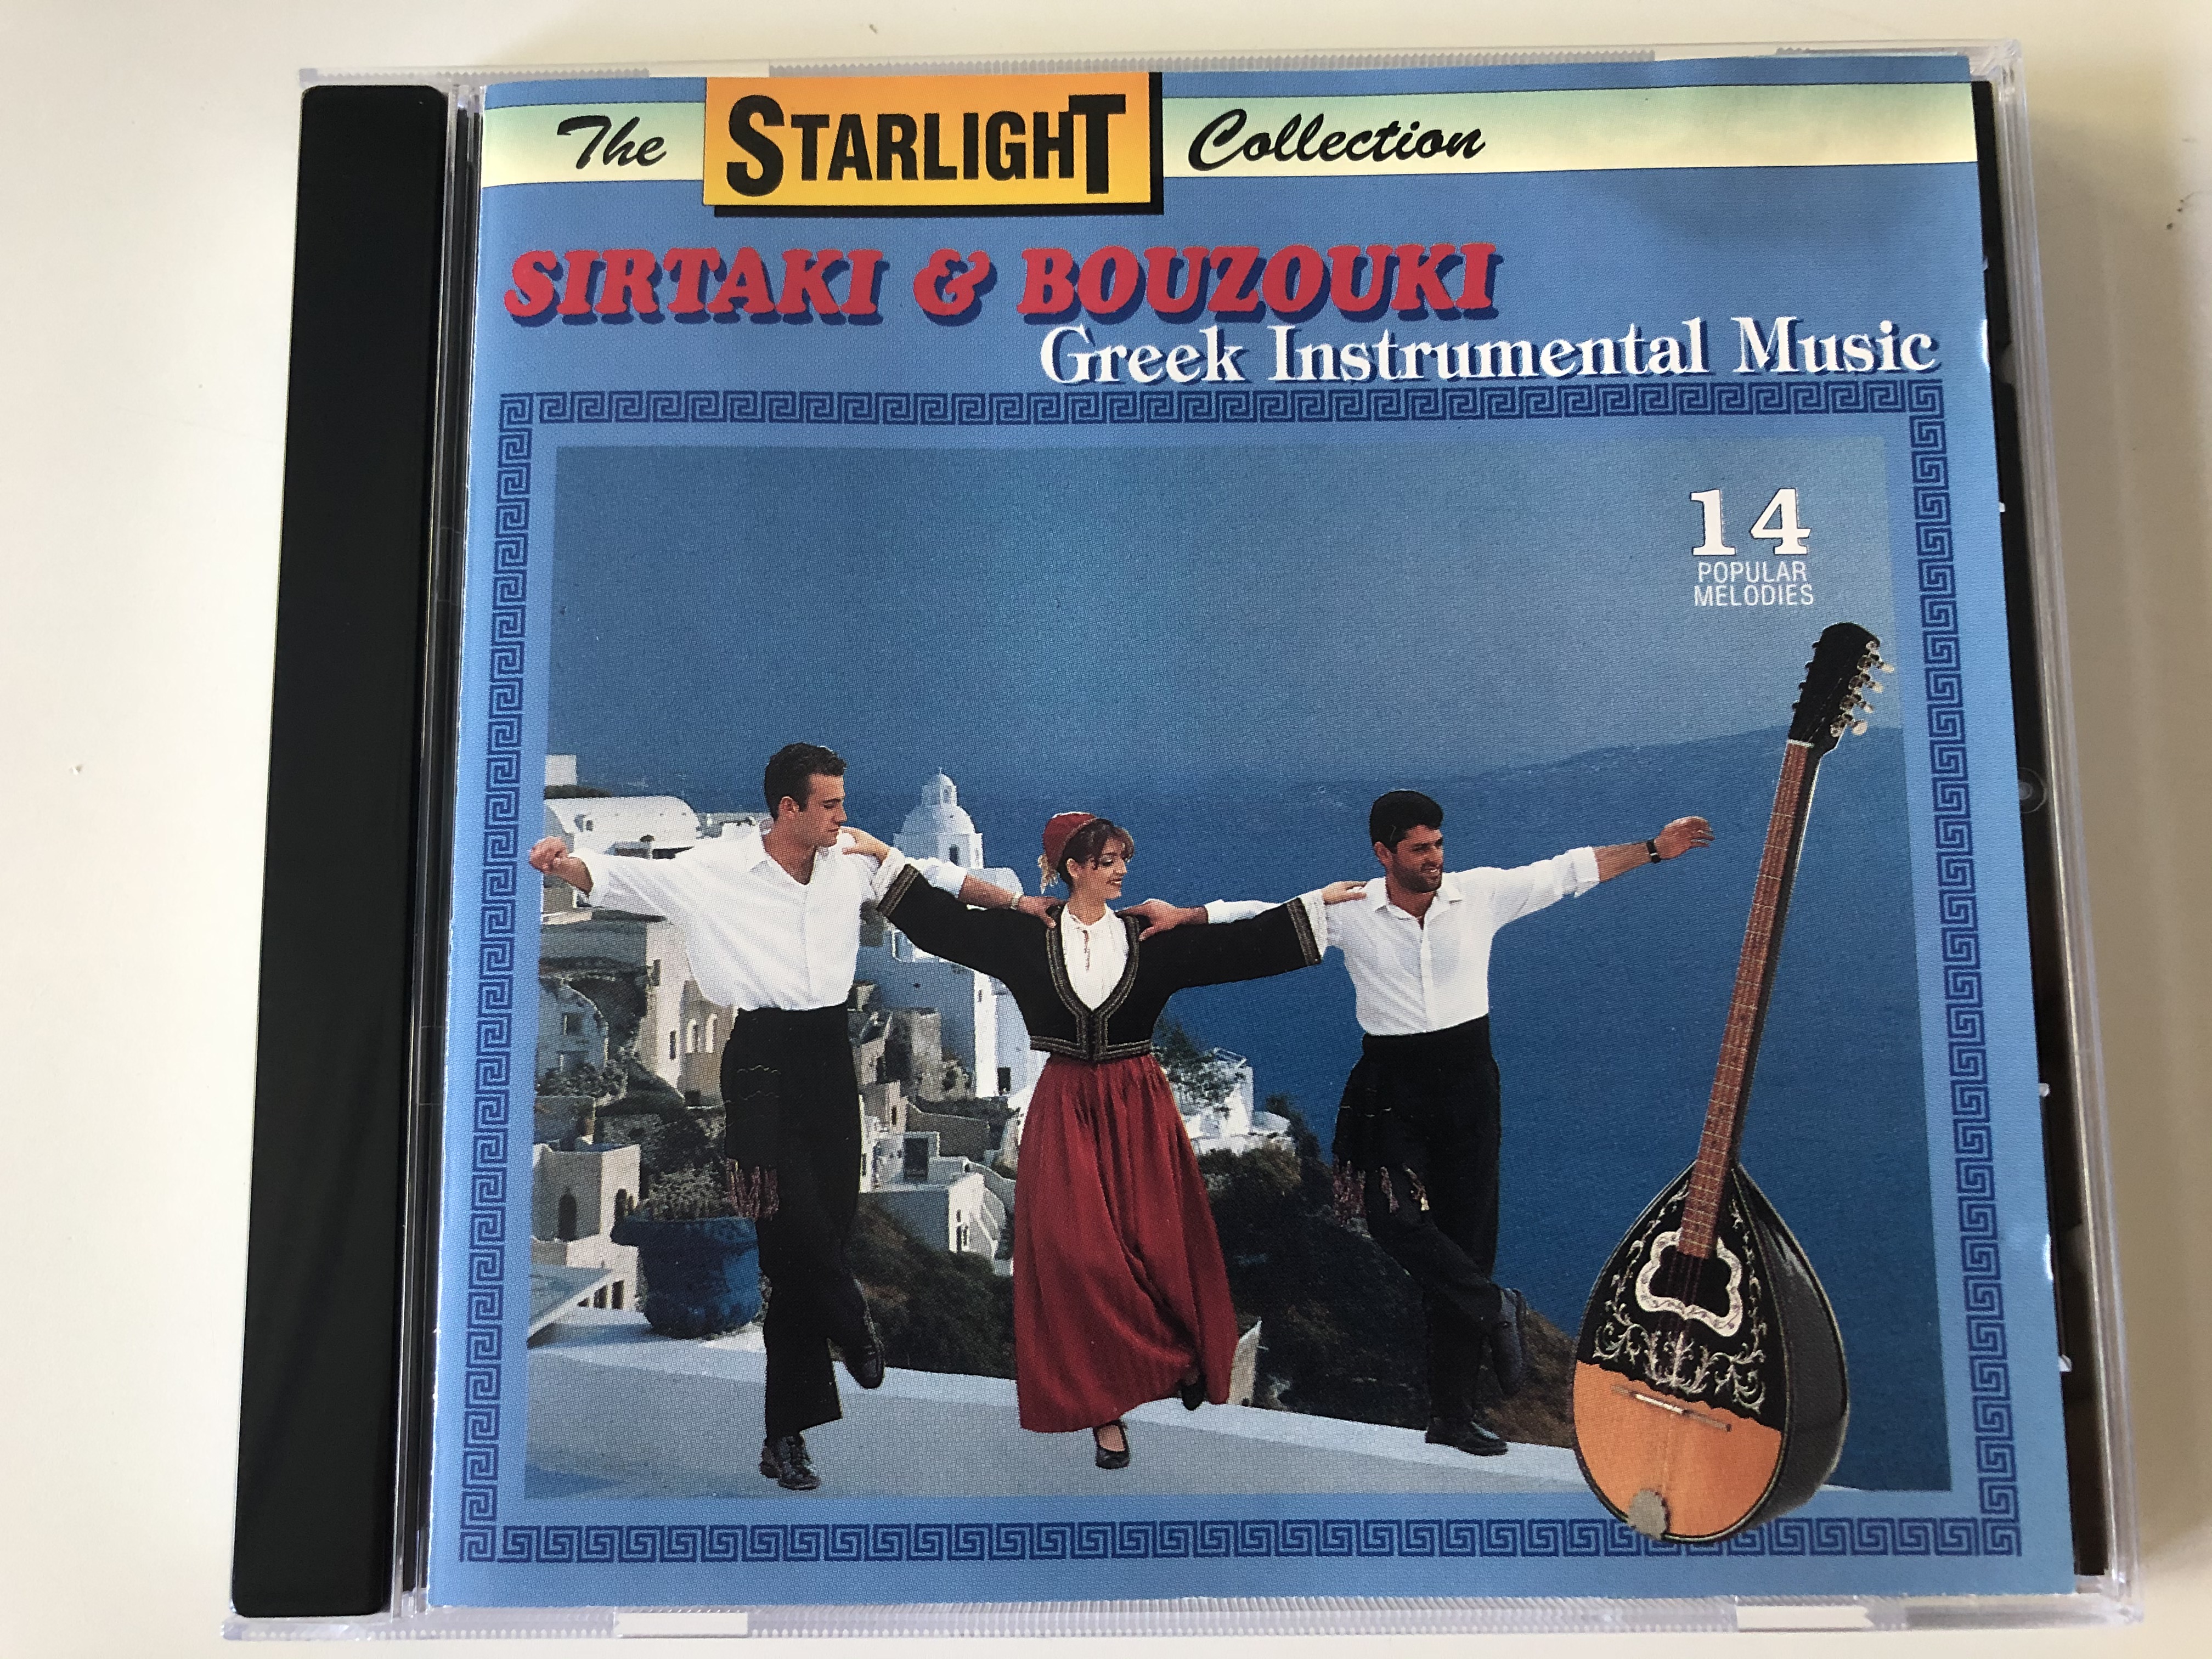 the-starlight-collection-sirtaki-bouzouki-greek-instrumental-music-14-popular-melodies-galaxy-music-ltd.-audio-cd-1995-3882042-1-.jpg